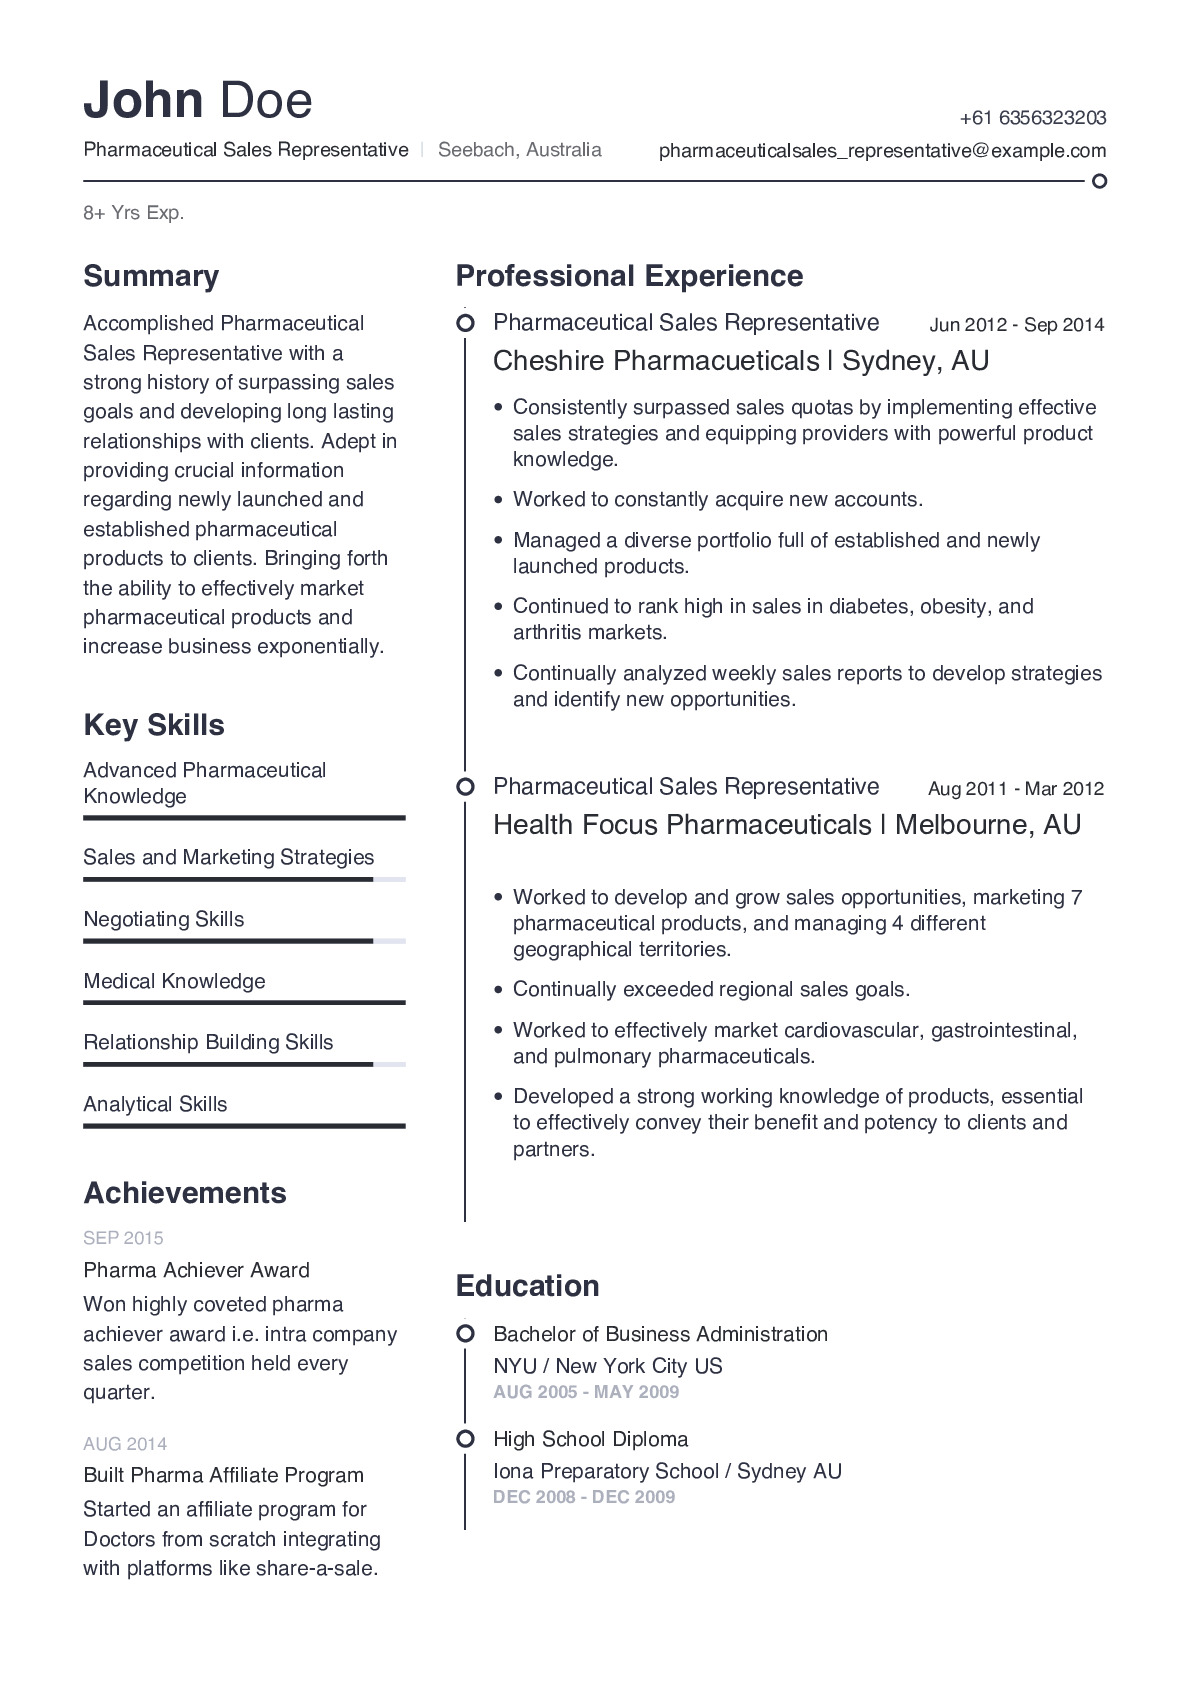 resume format for pharma marketing manager